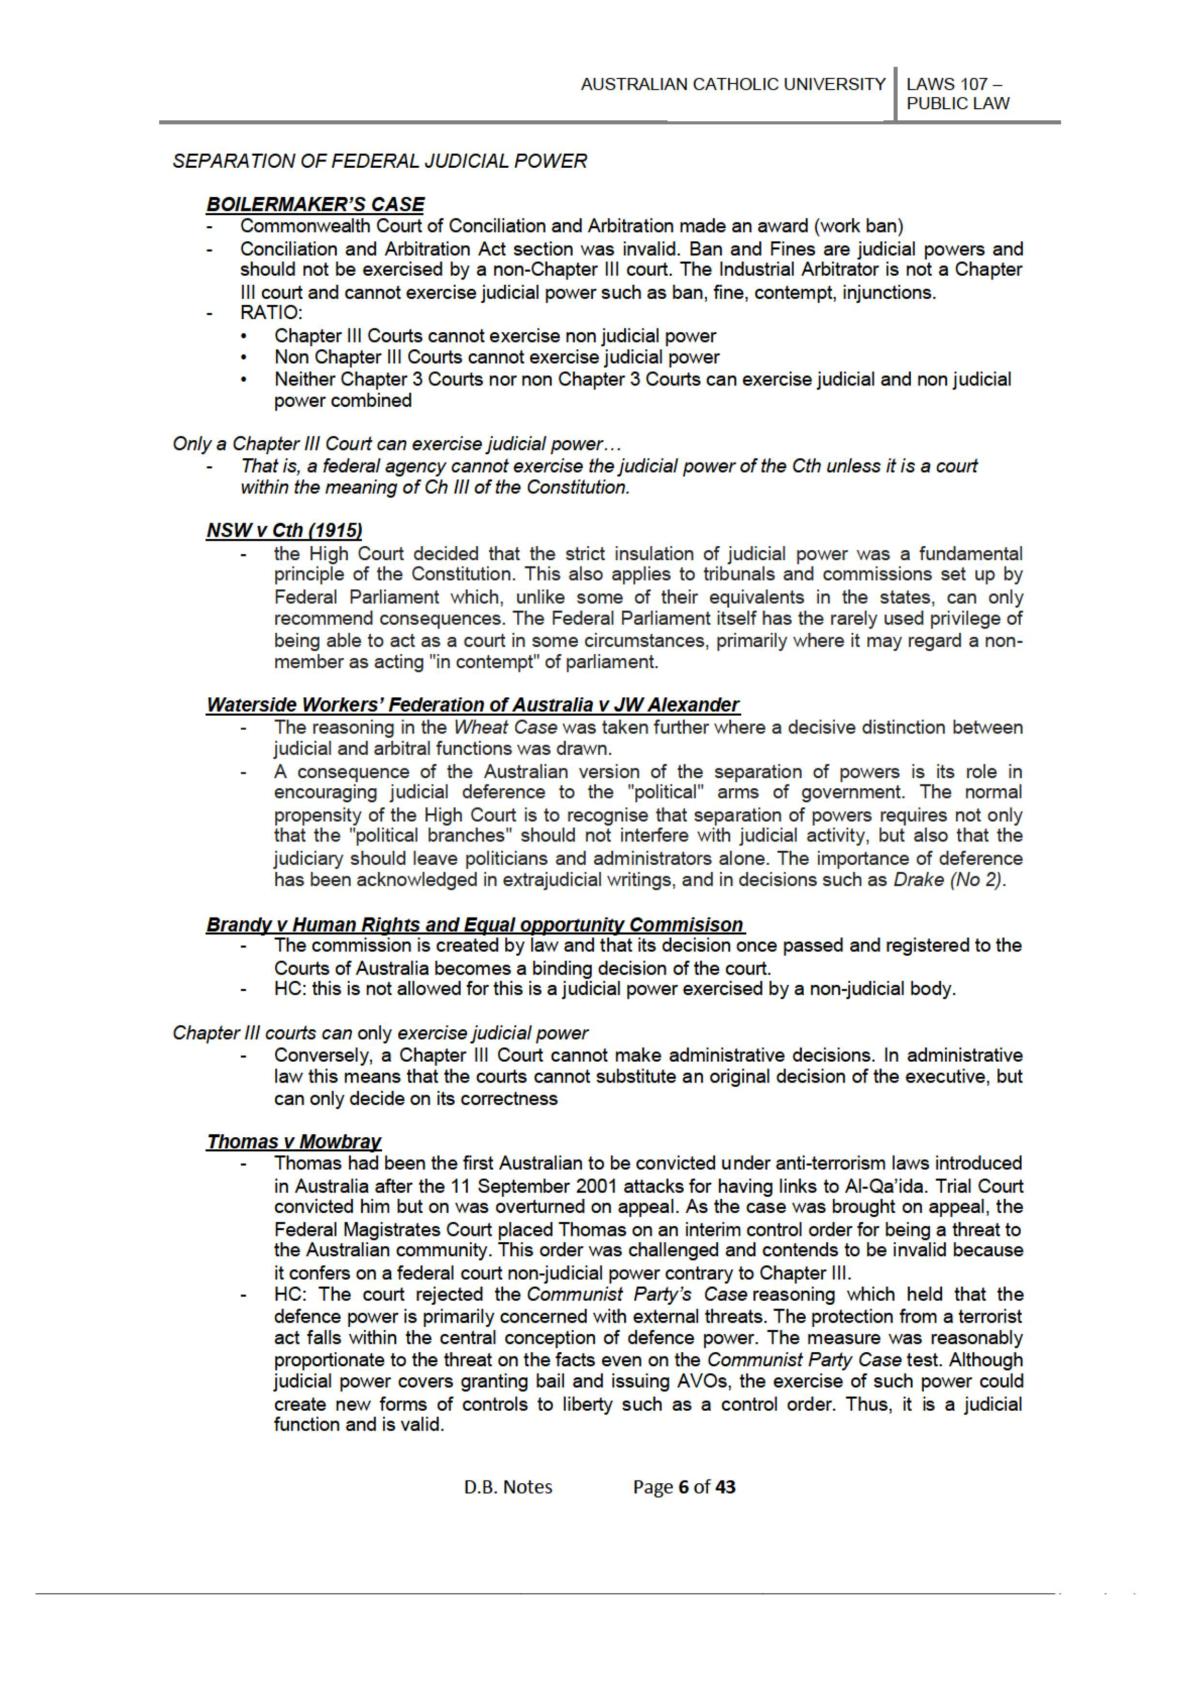 Public Law Summary - Page 25